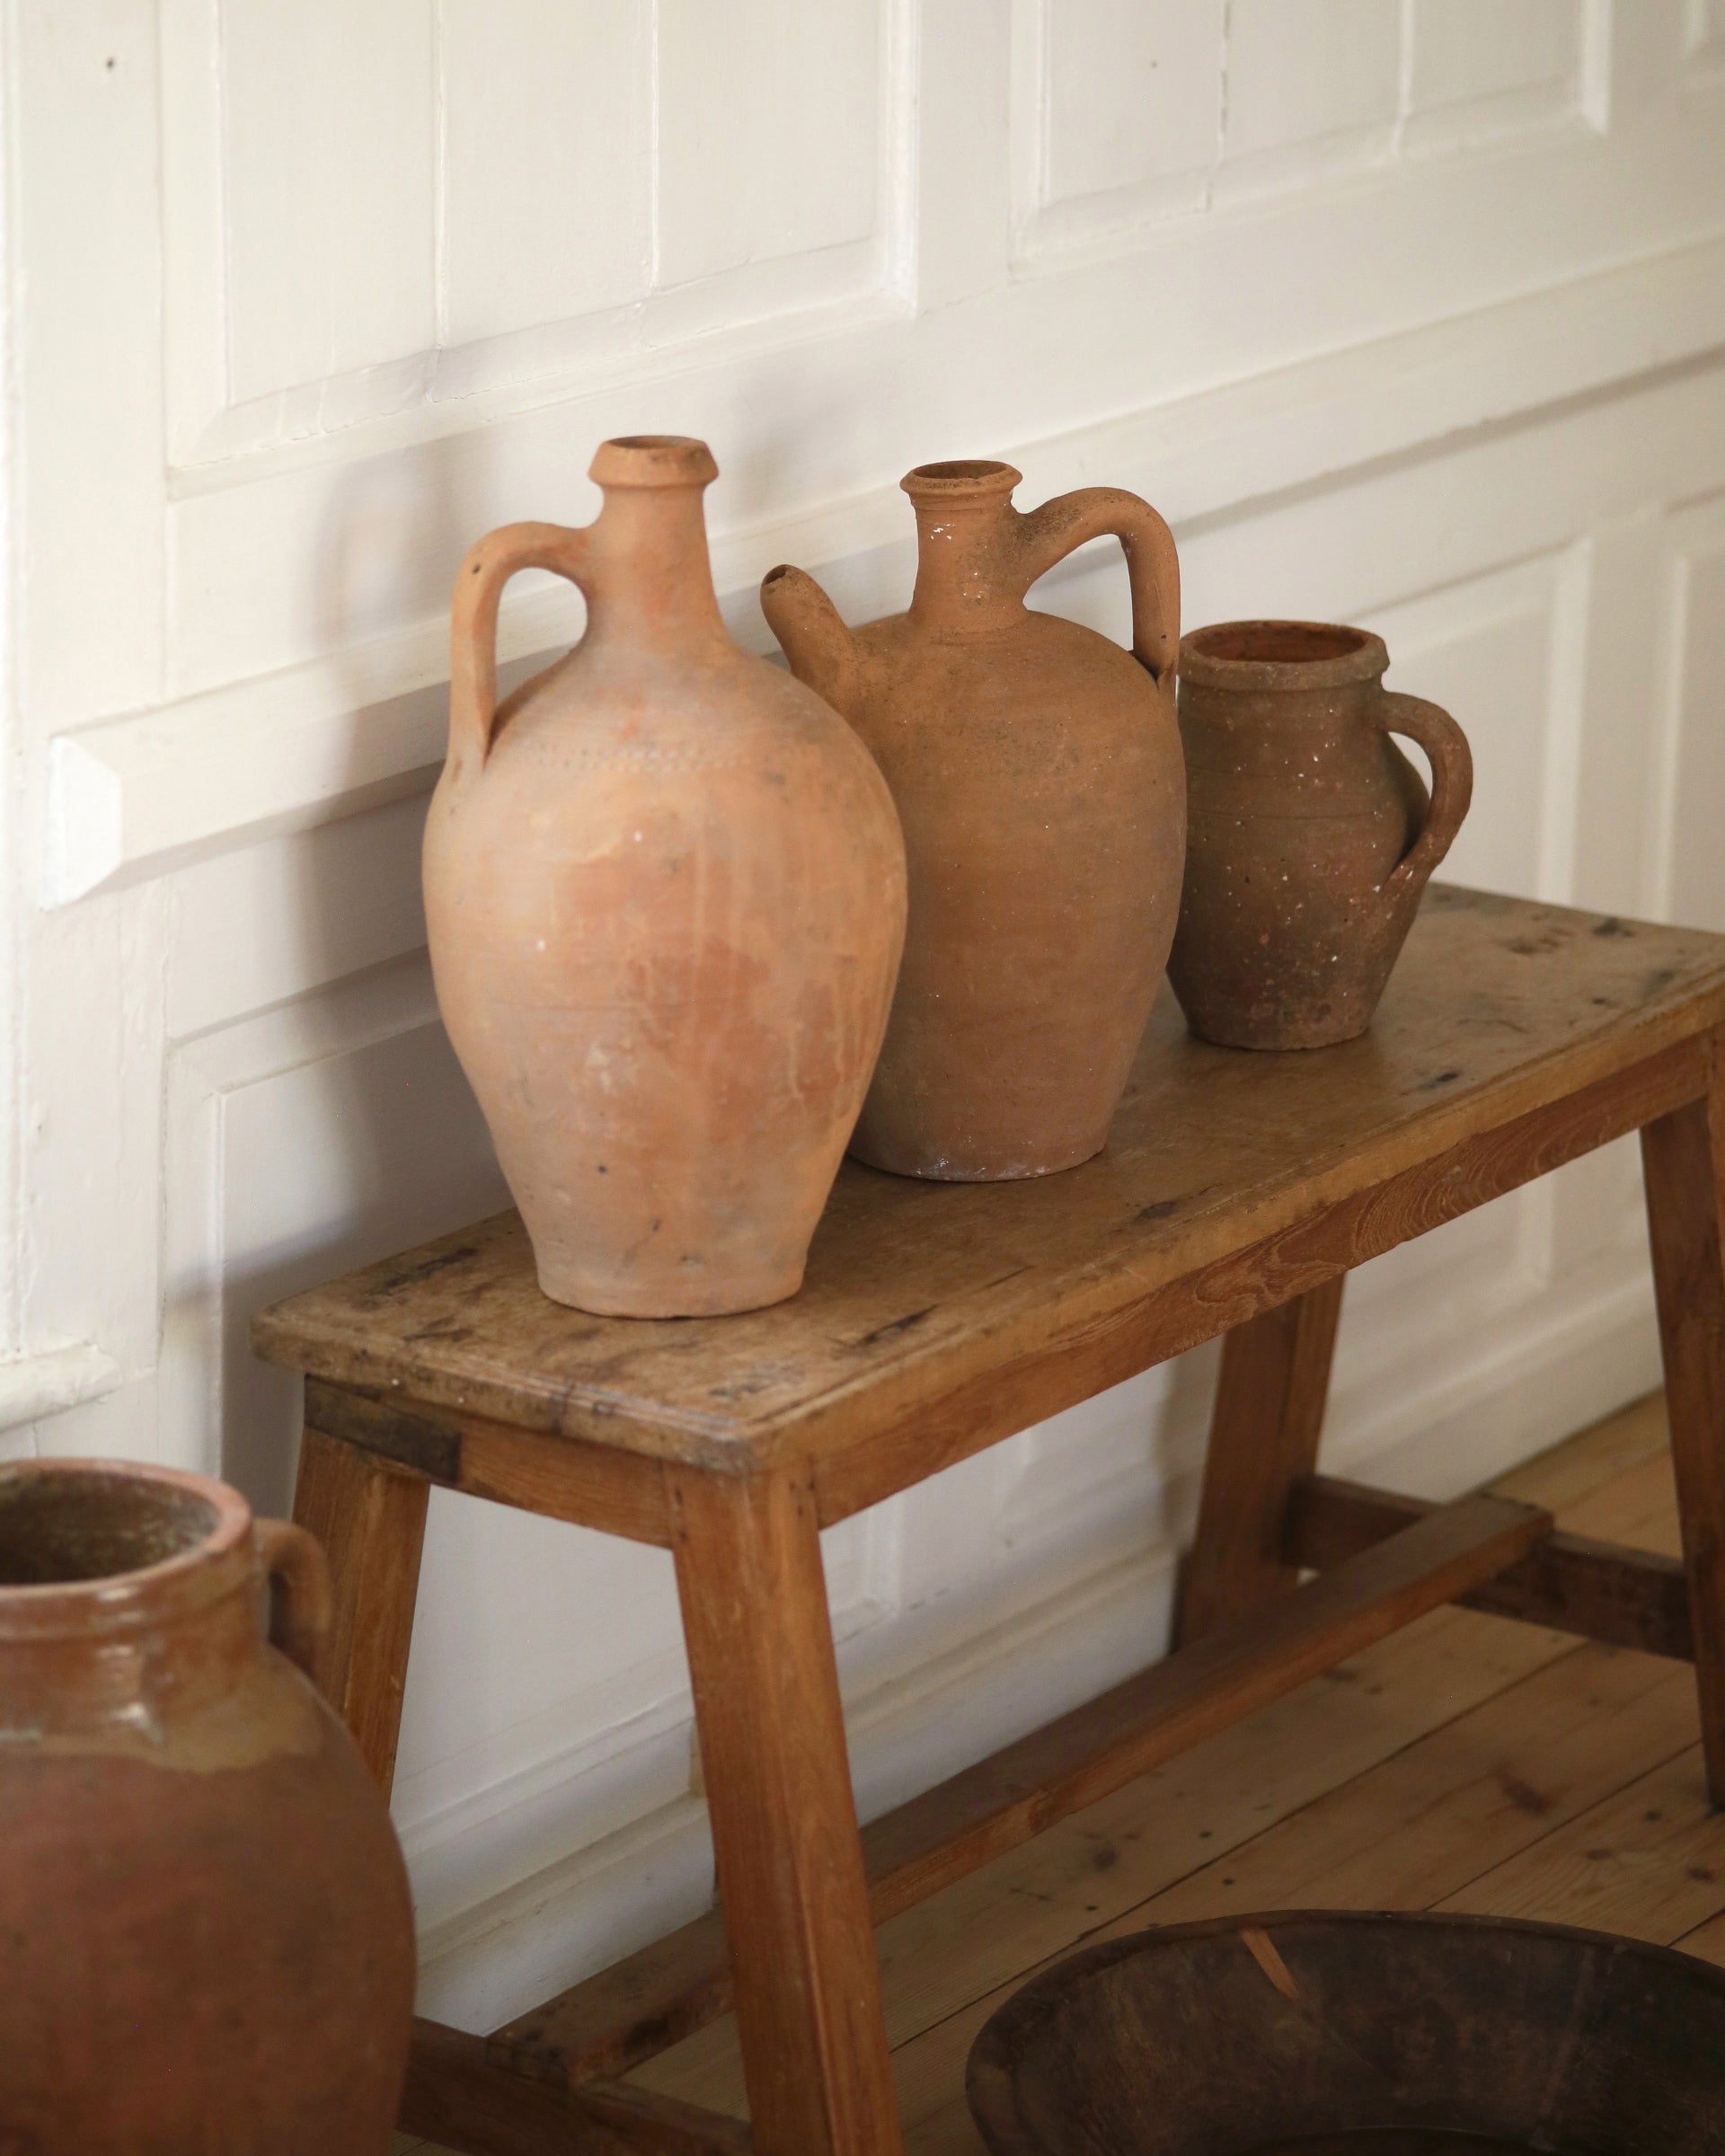 Terracotta homeware pitchers, pots and jugs